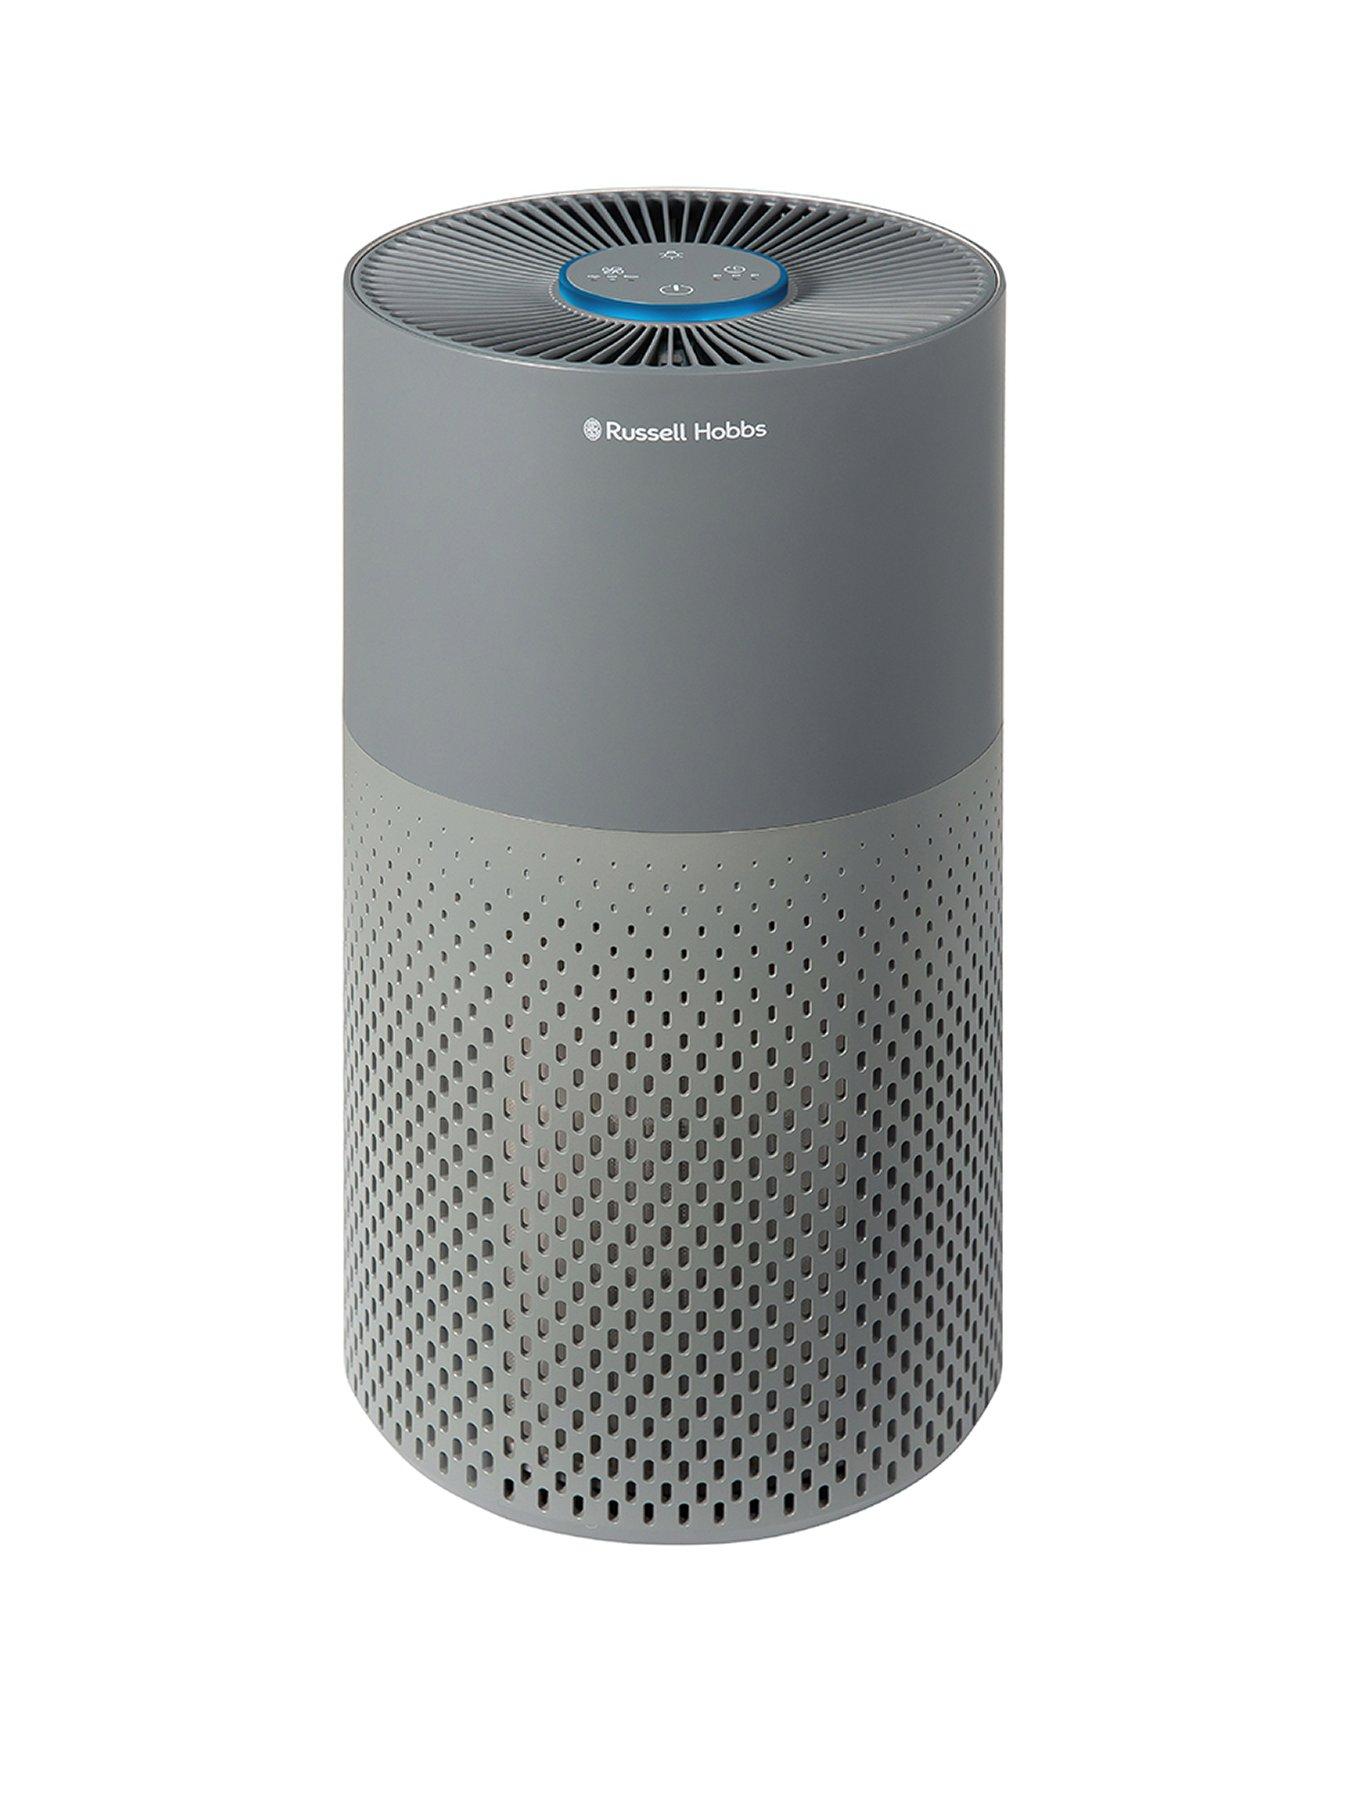 Russell Hobbs Rhpac4002 9000Btu Portable Air Conditioner And Dehumidifier